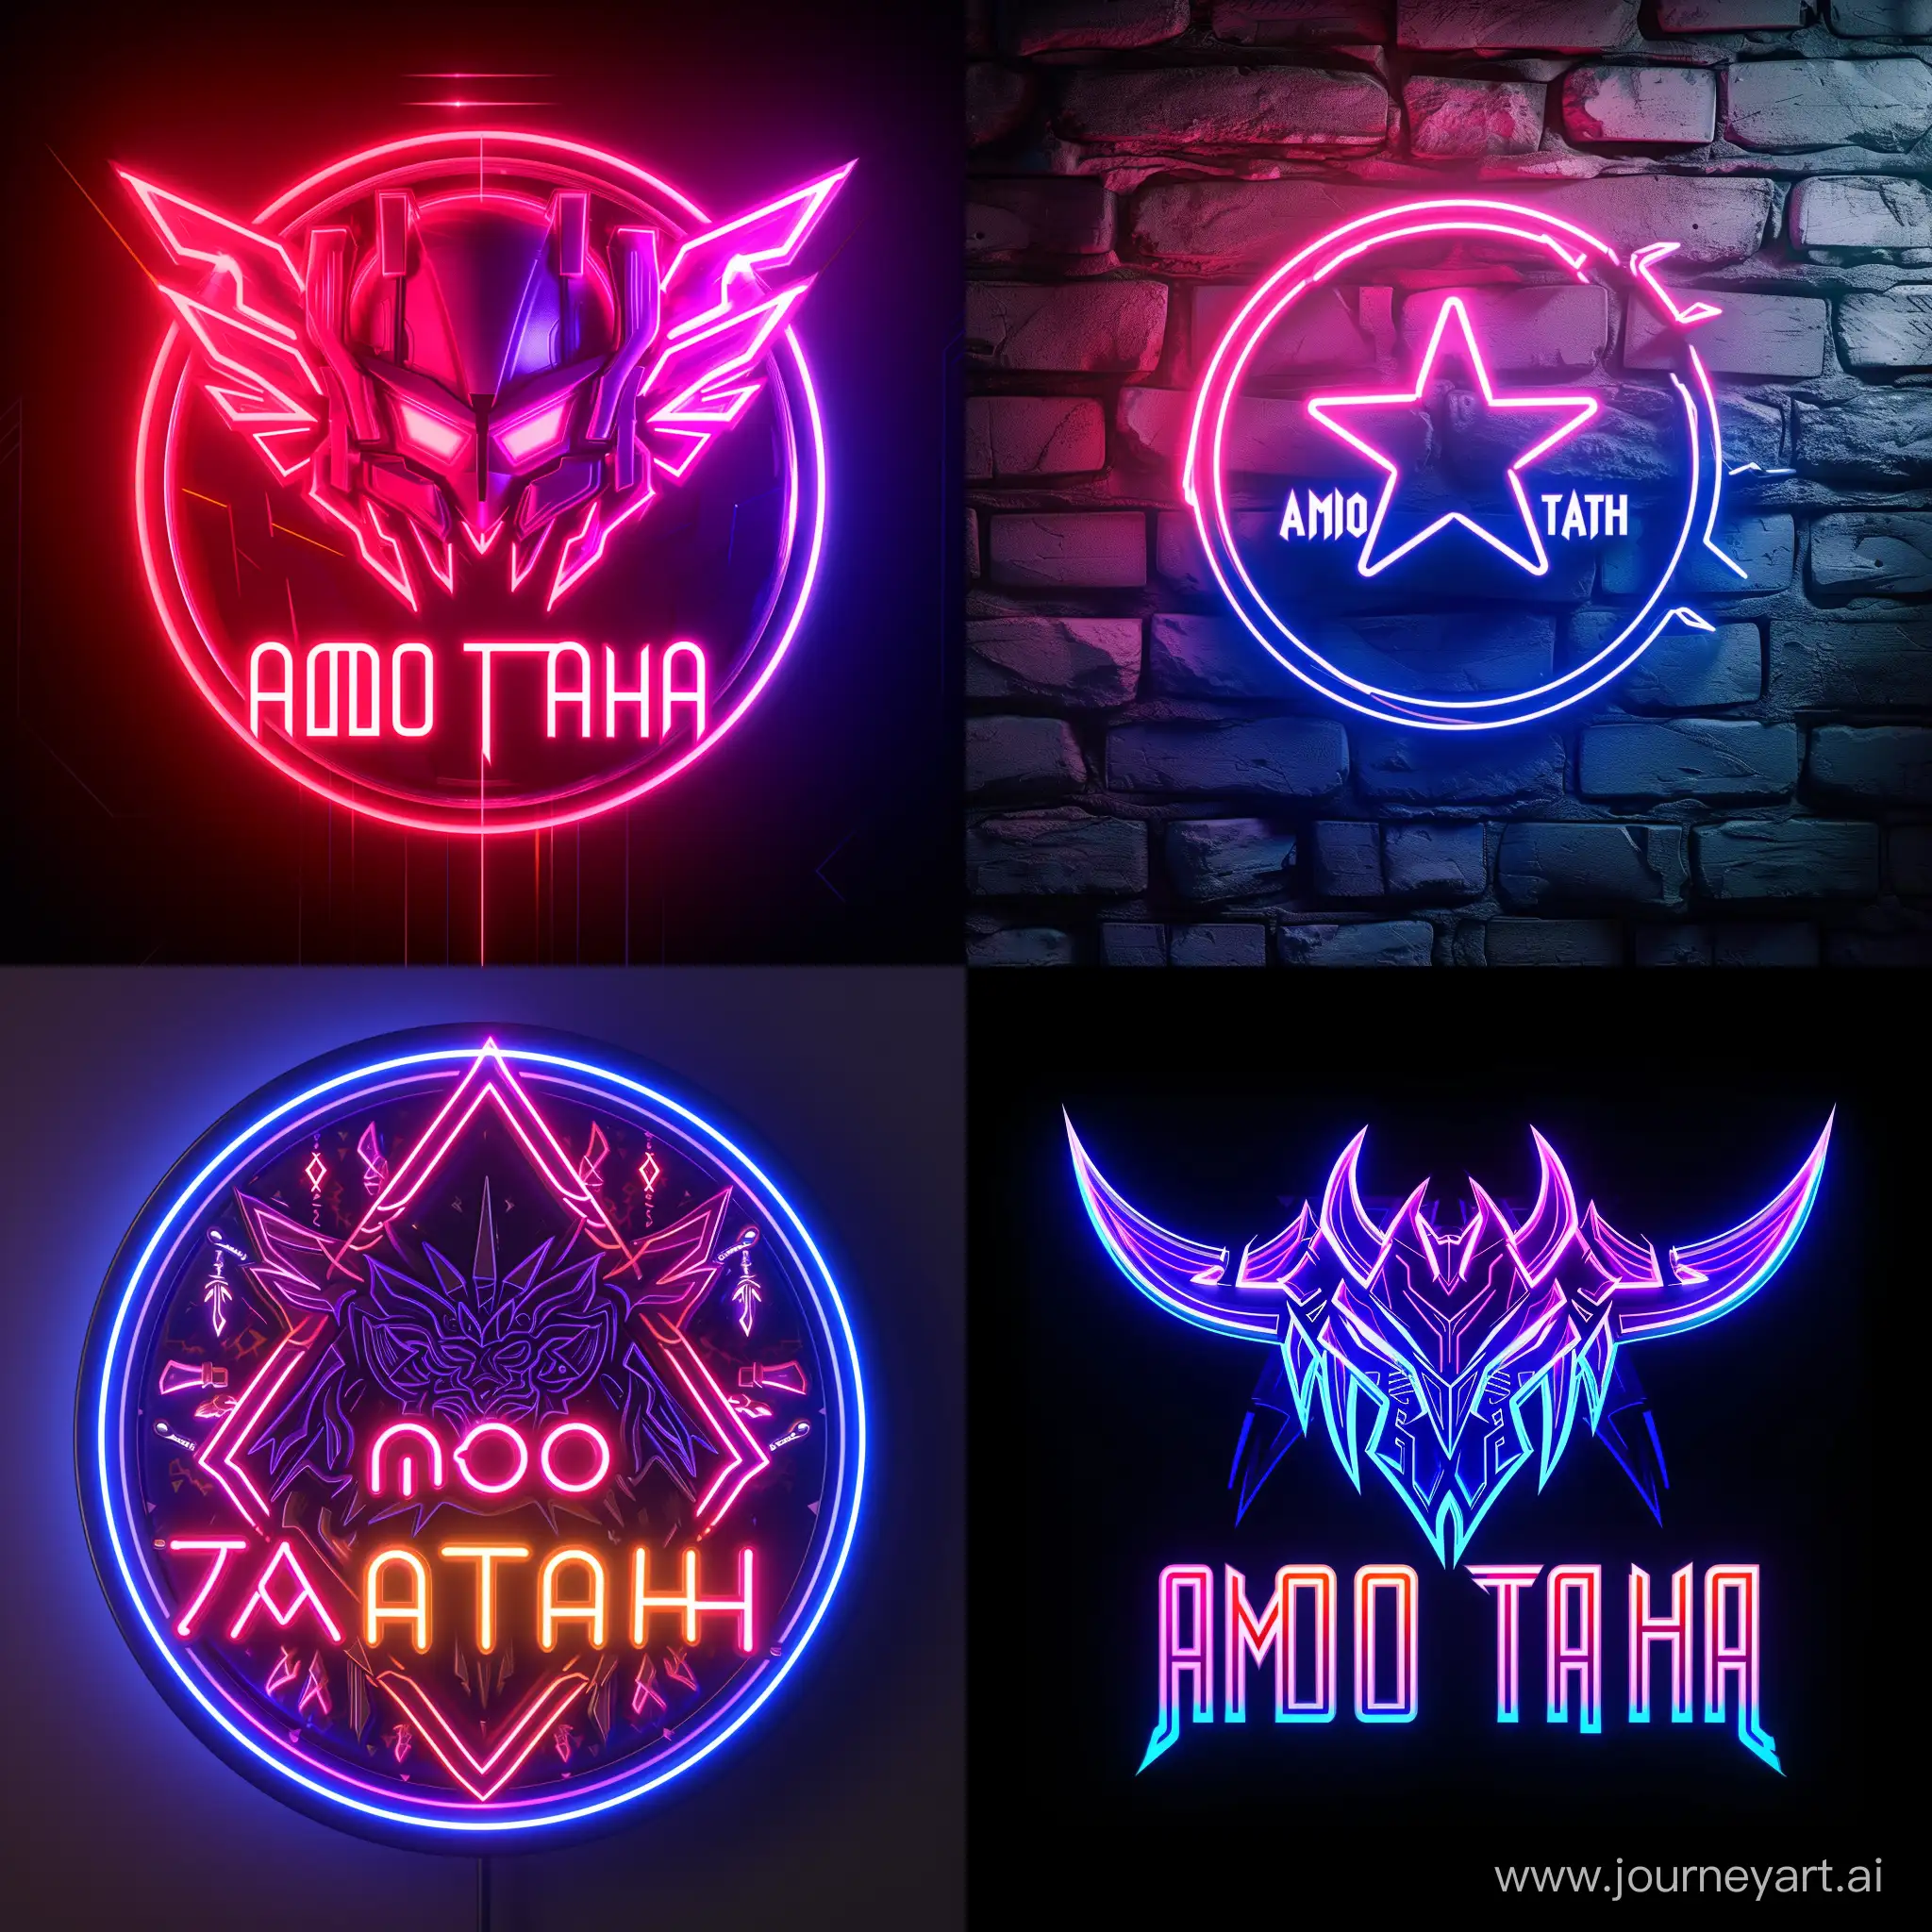 the neon gaming logo with AMO TAHA